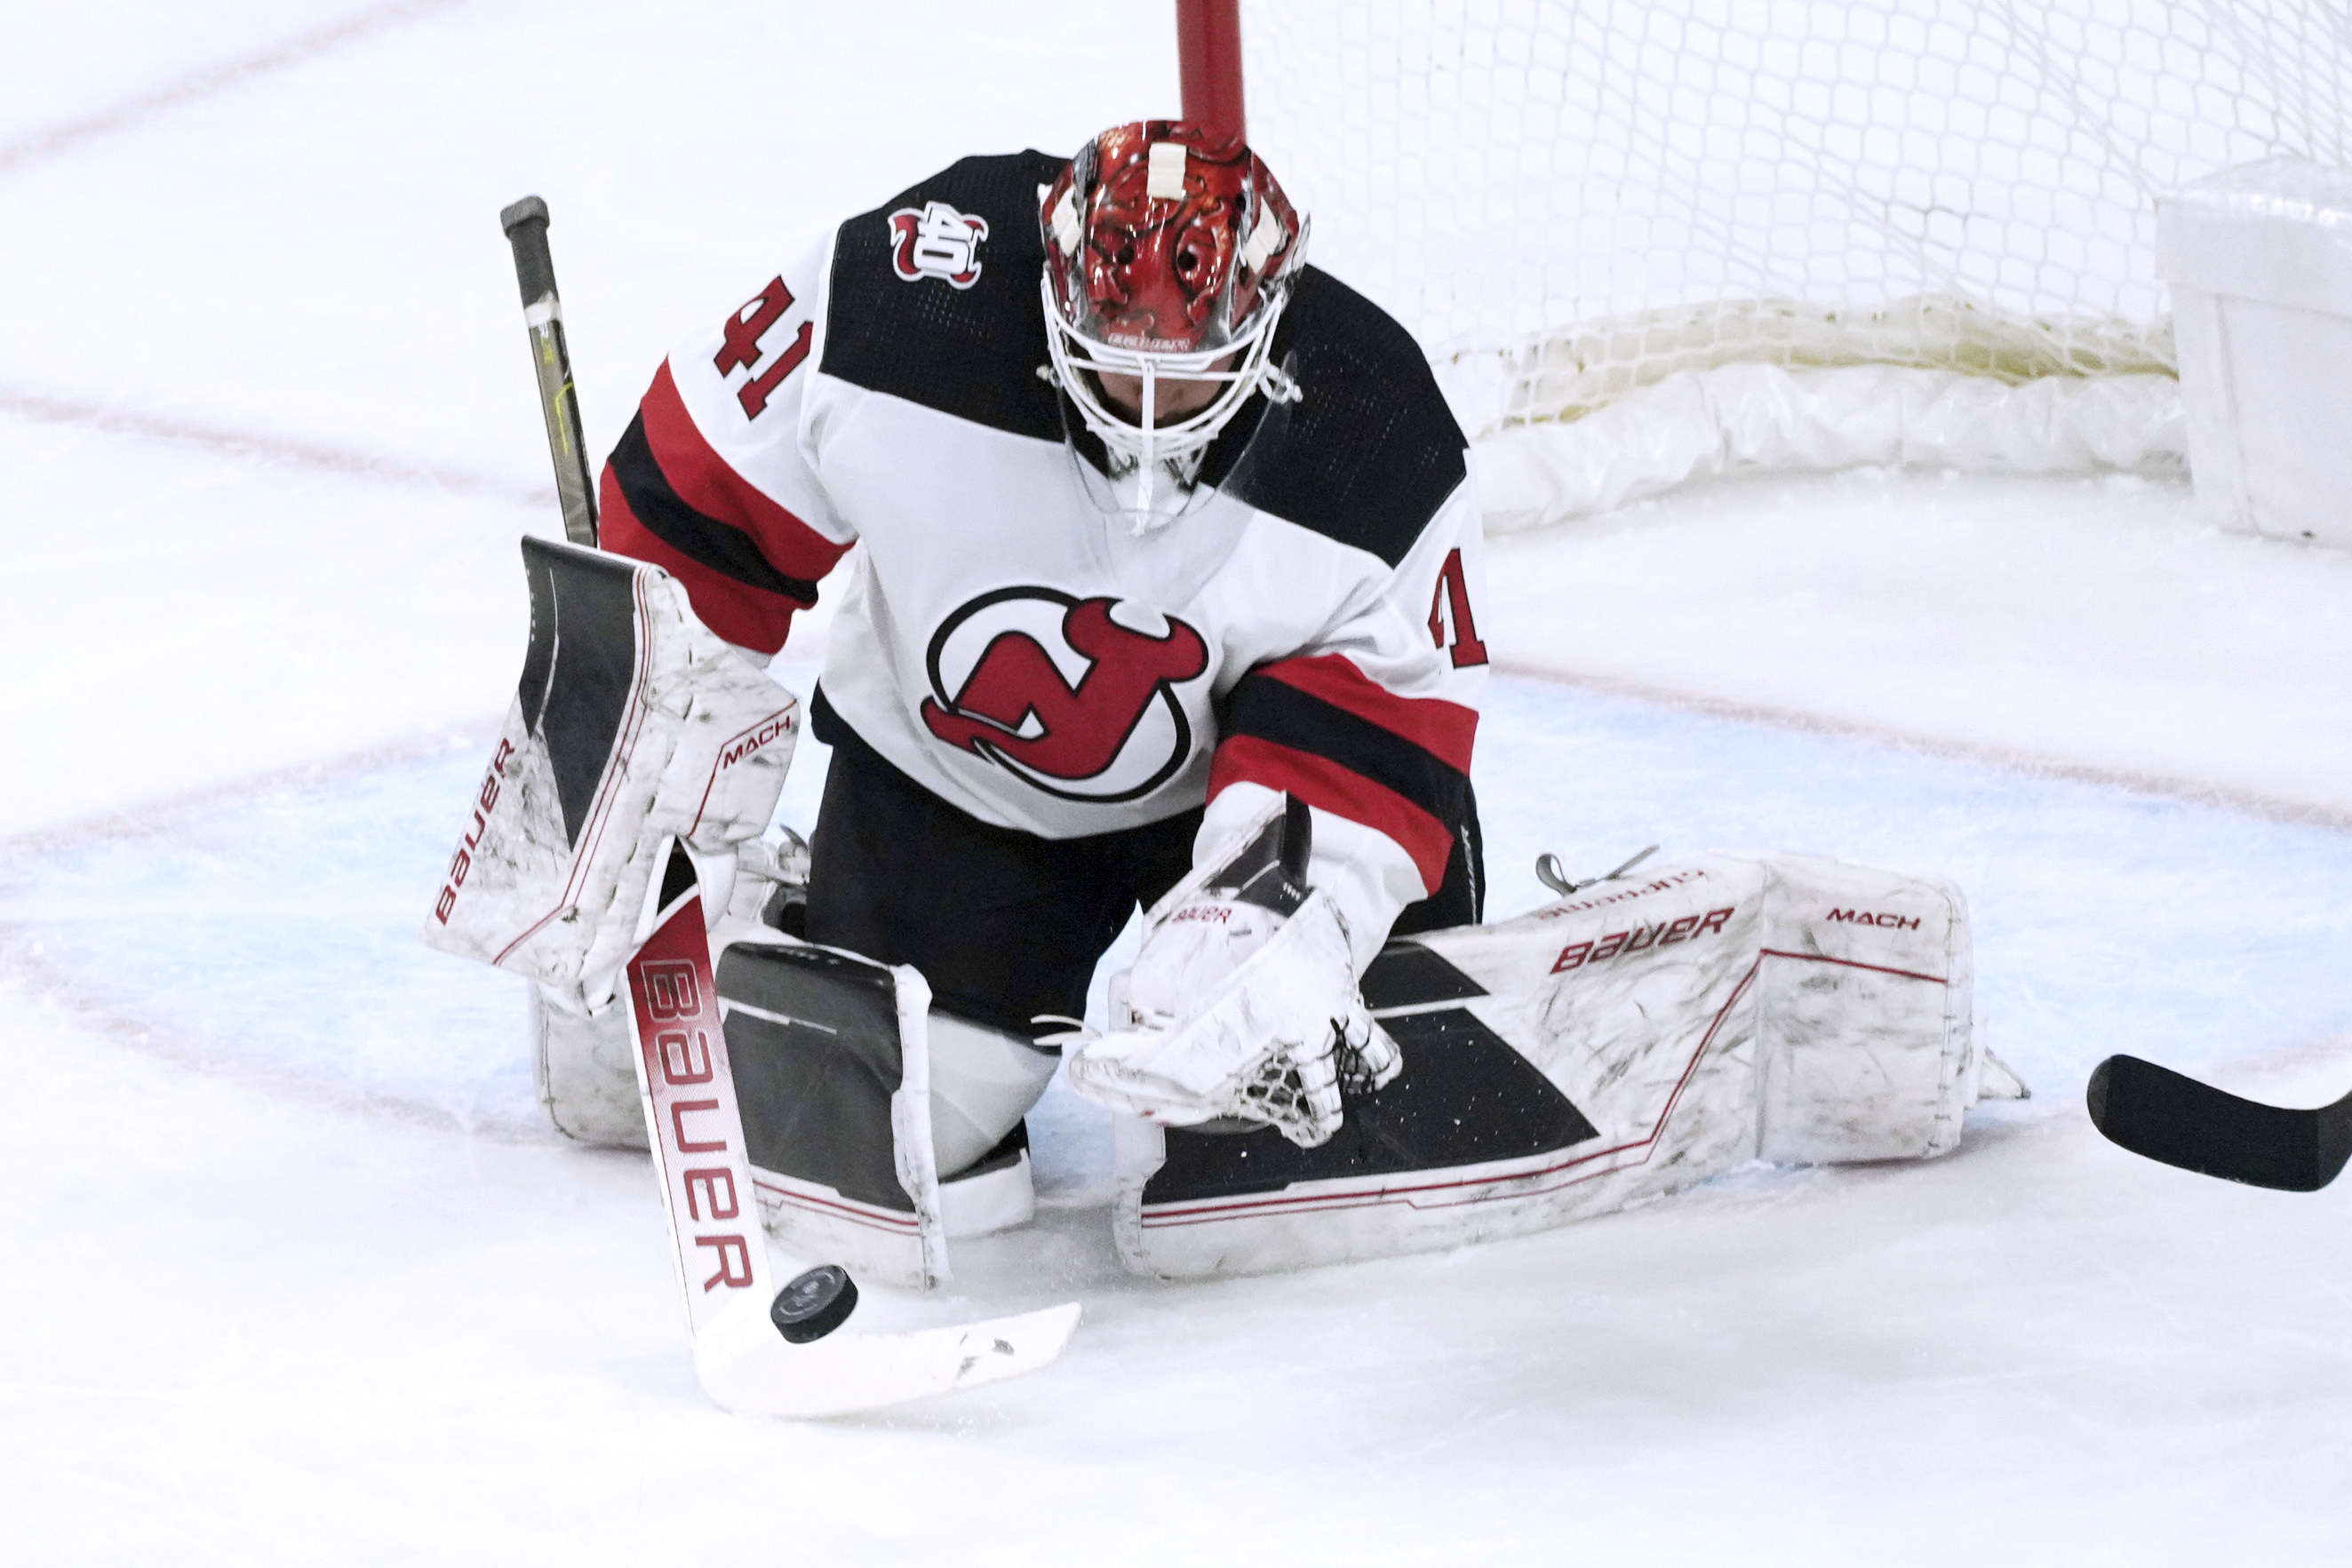 Brodeur sets NHL record for career victories as Devils edge Blackhawks